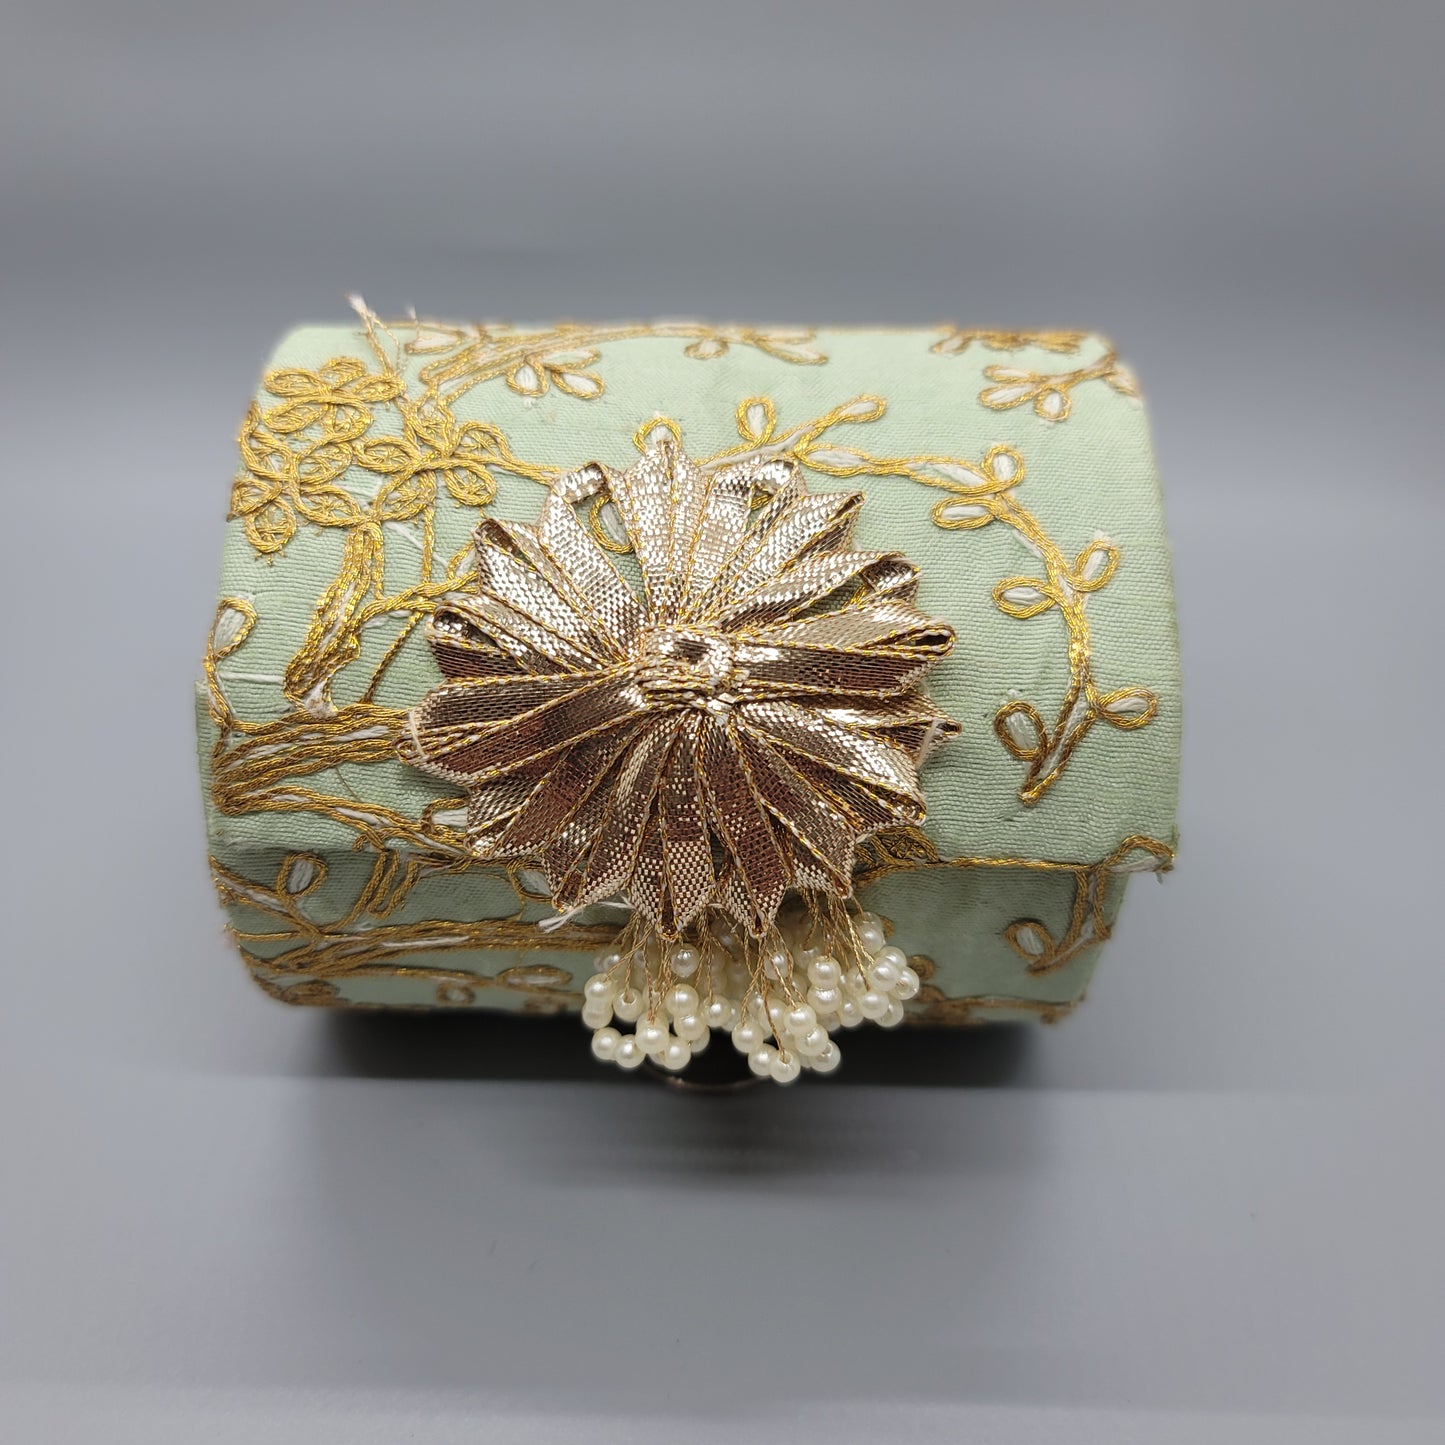 Designer Zardosi Bangle Box With Floral Pearl Hangings